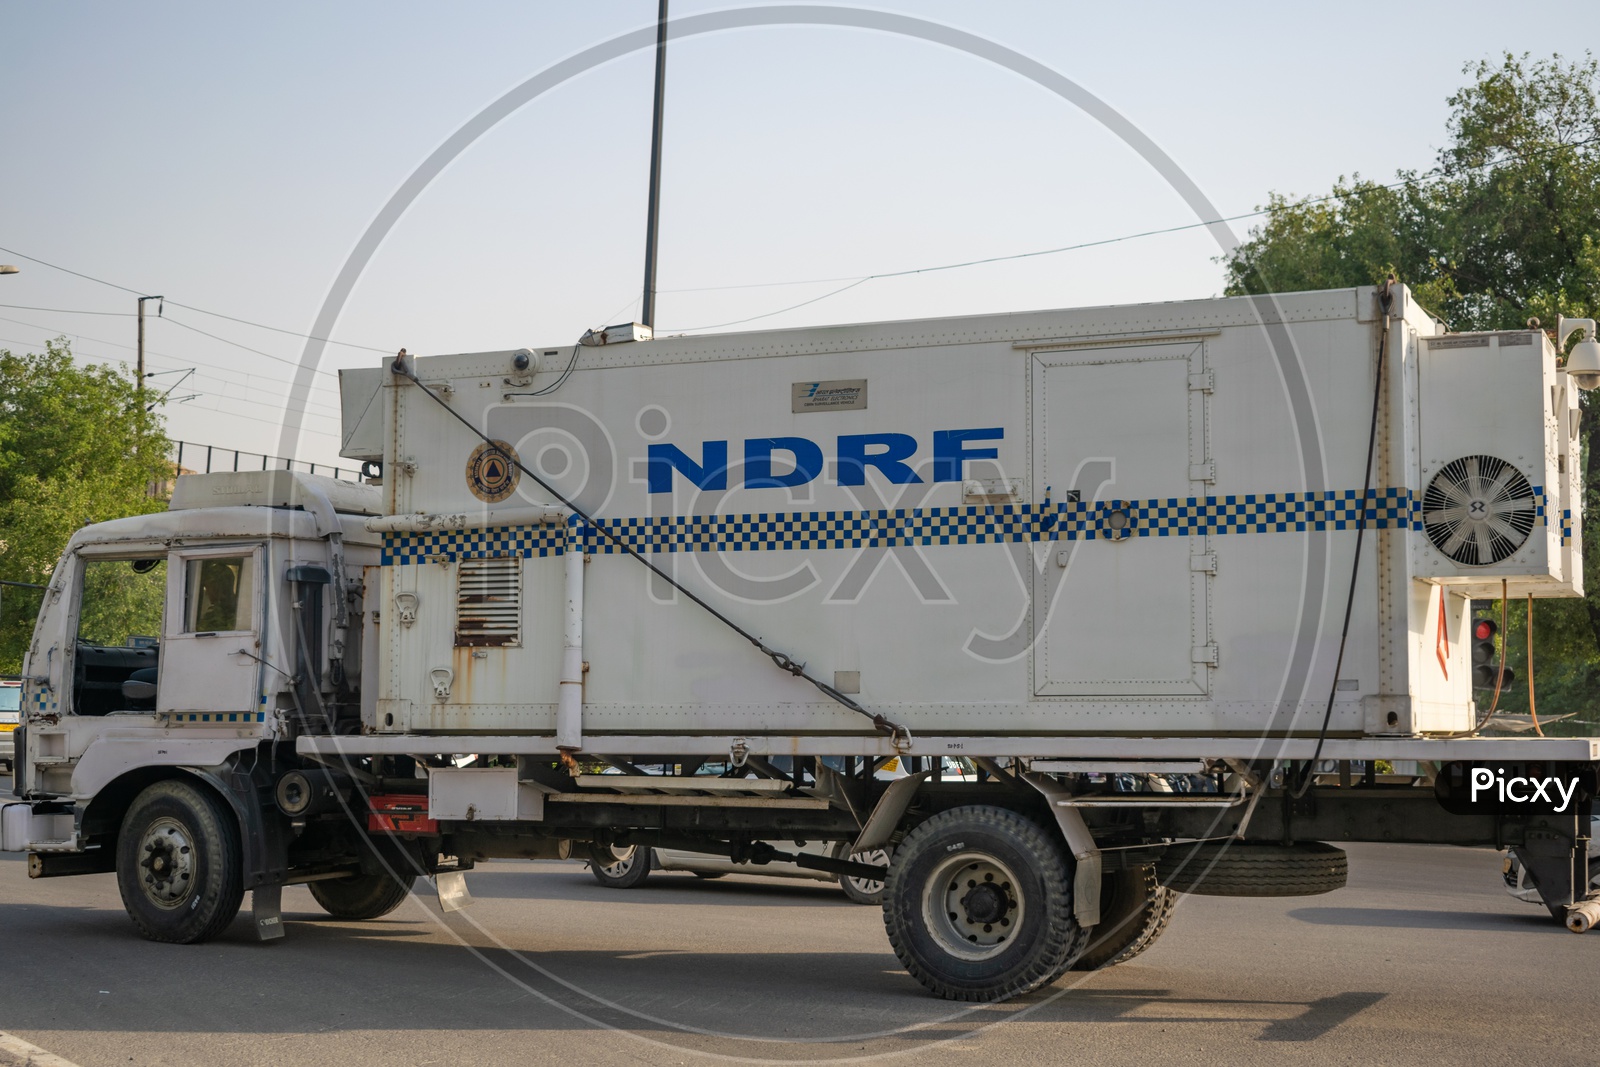 NDRF - National Disaster Response Force Vehicle, Delhi